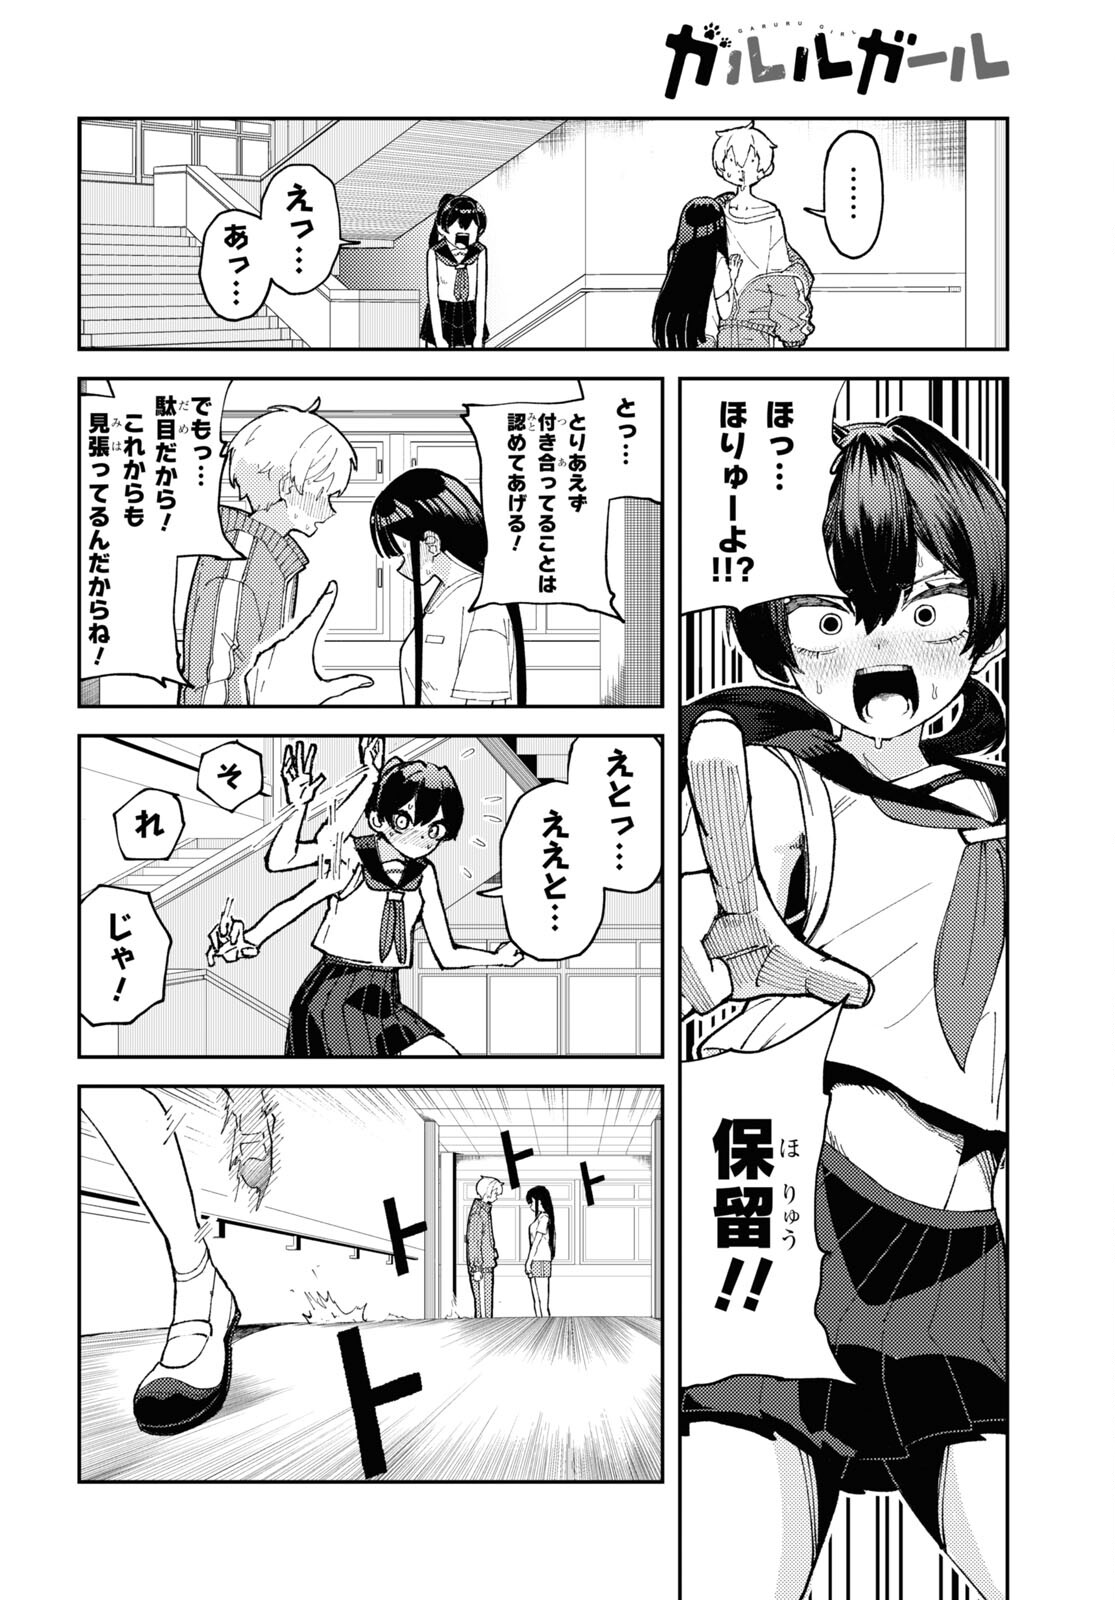 Garuru Girl - Chapter 1 - Page 43